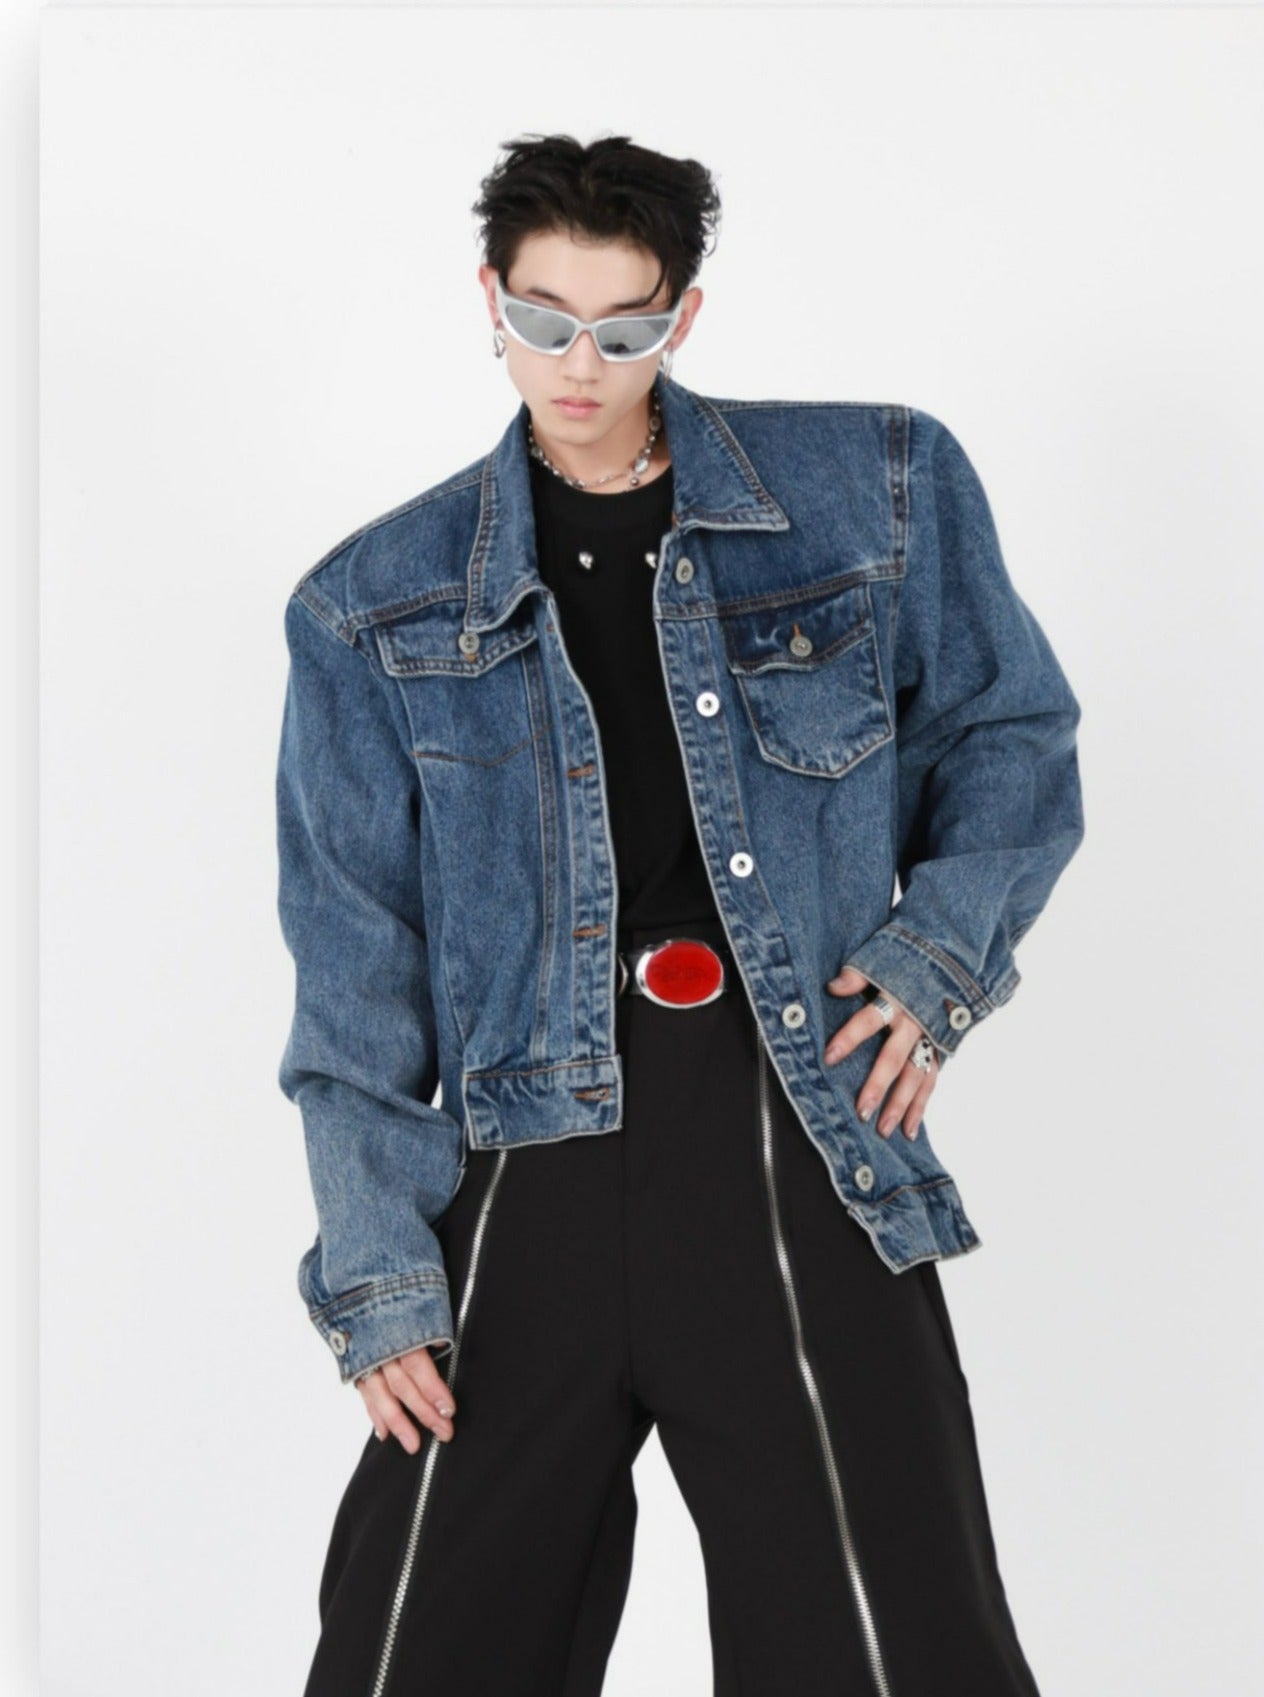 Asymmetrical Hem Denim Jacket Korean Street Fashion Jacket By Argue Culture Shop Online at OH Vault